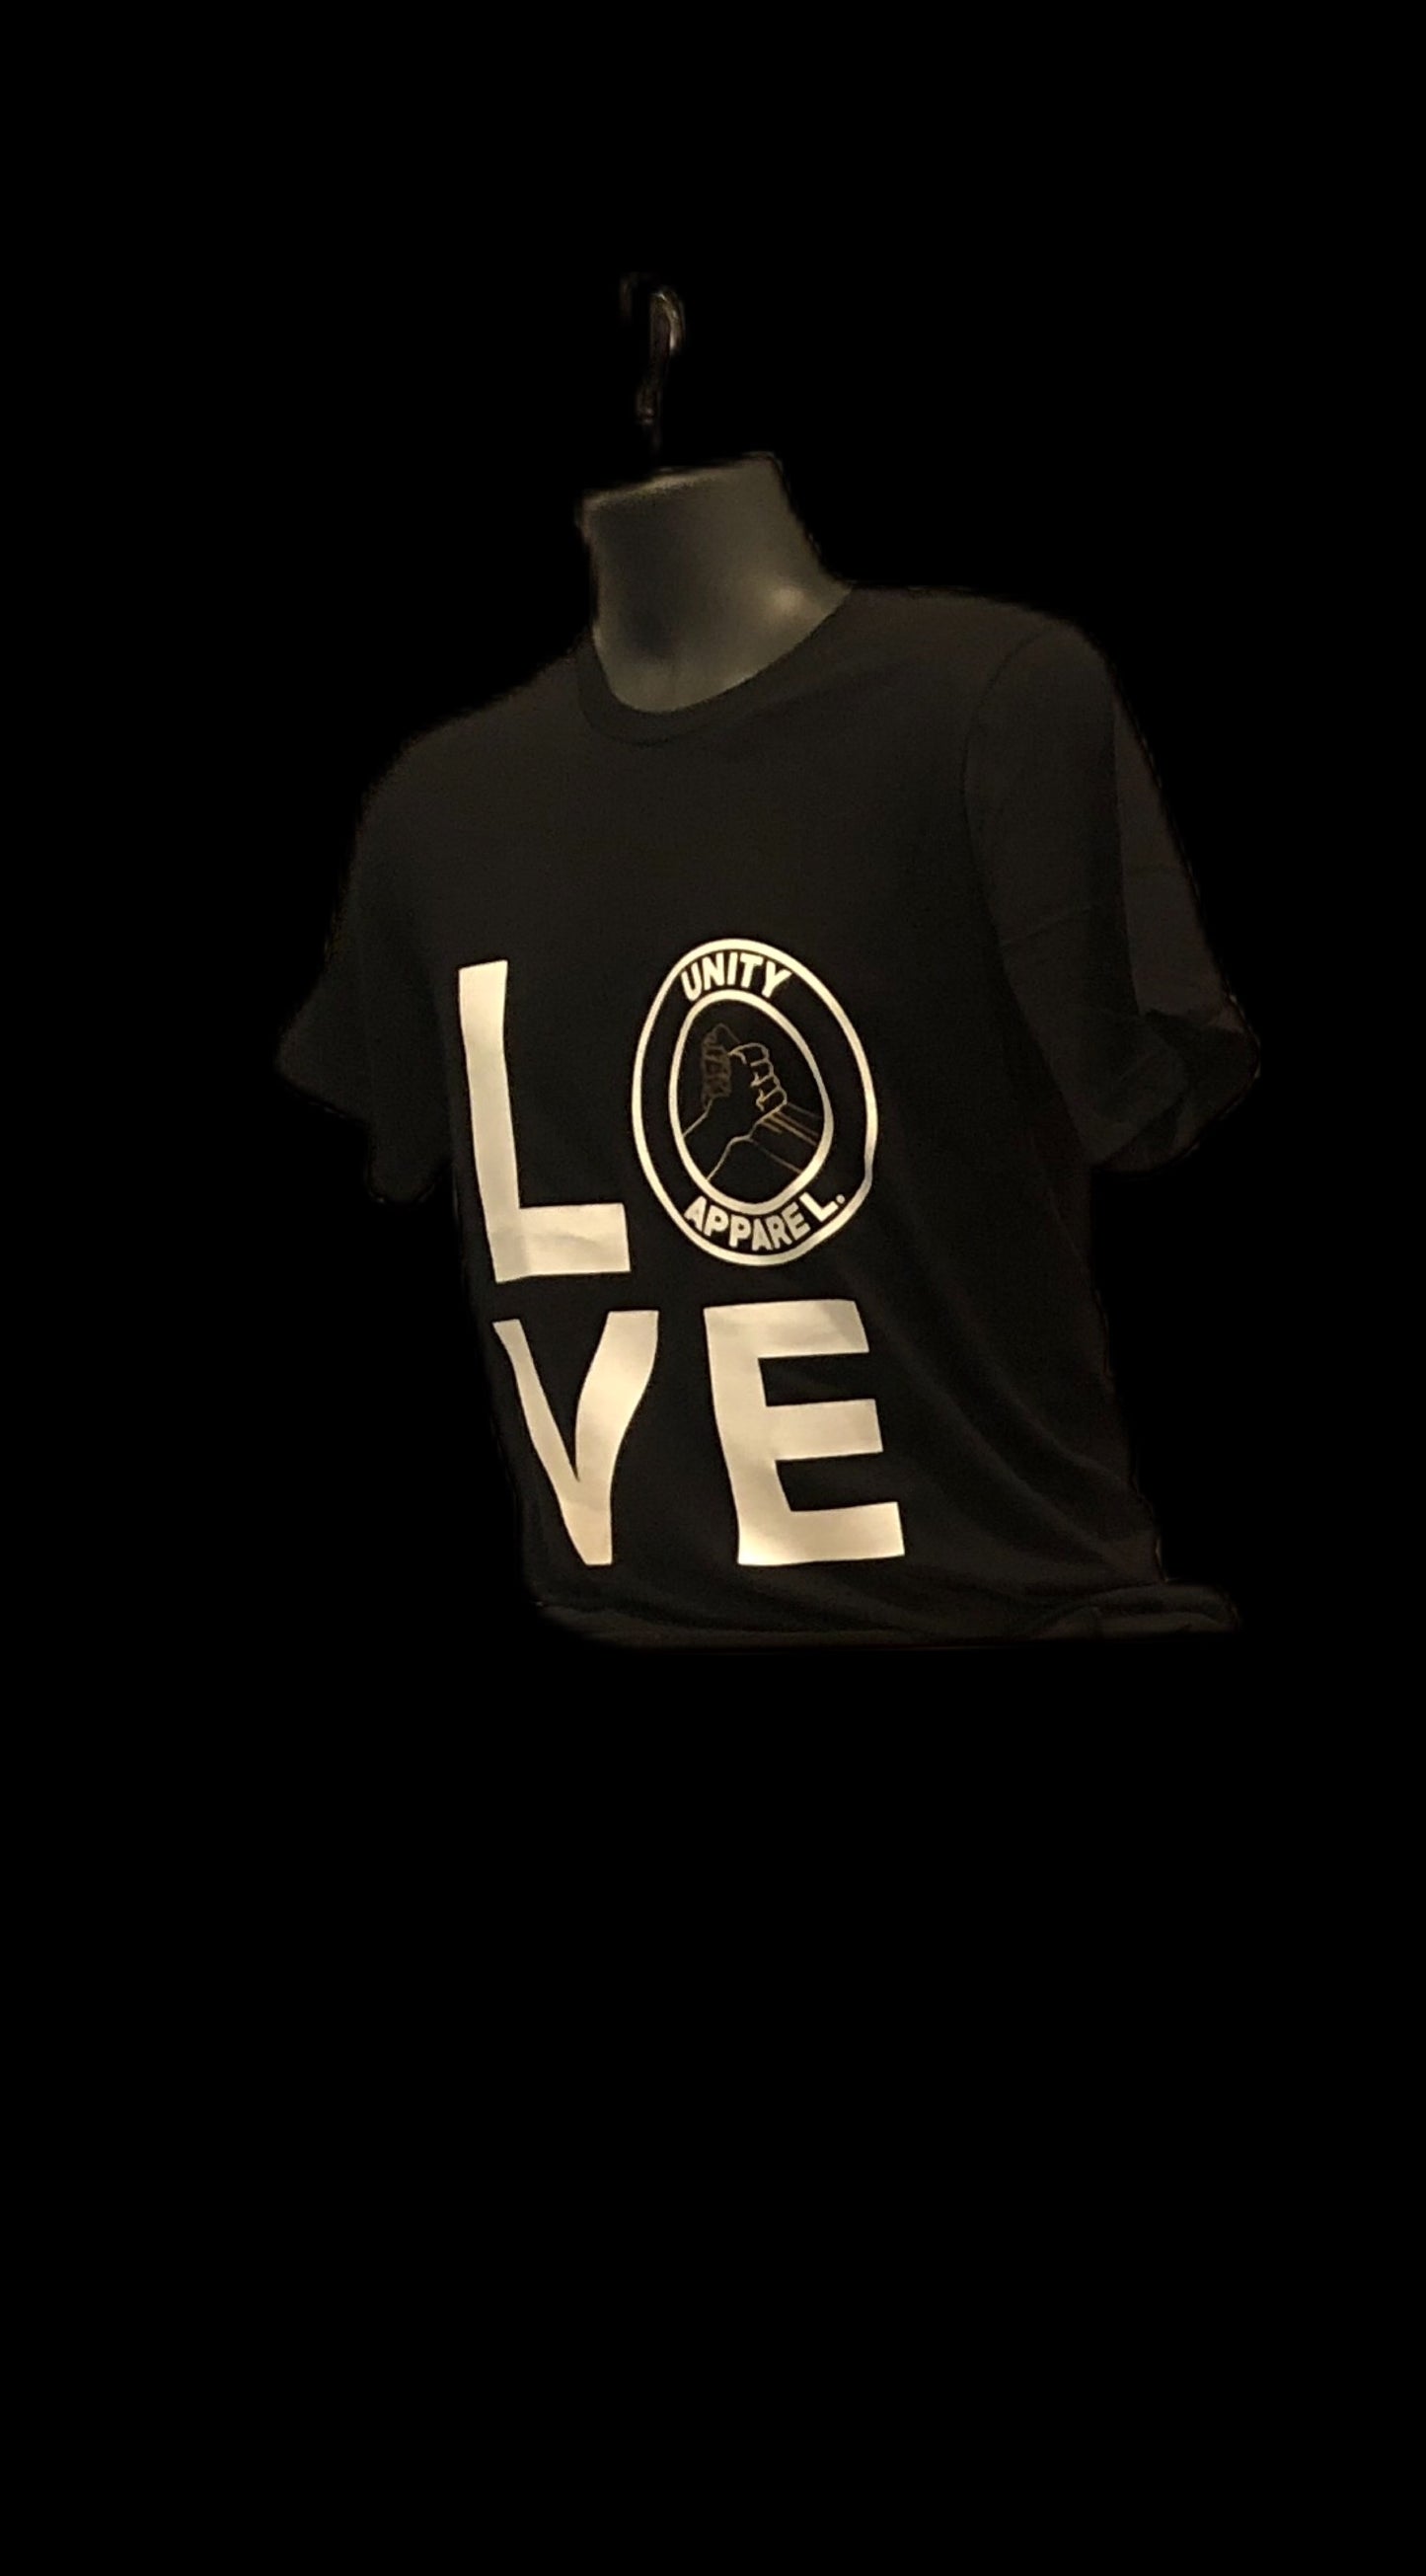 The Love Shirt